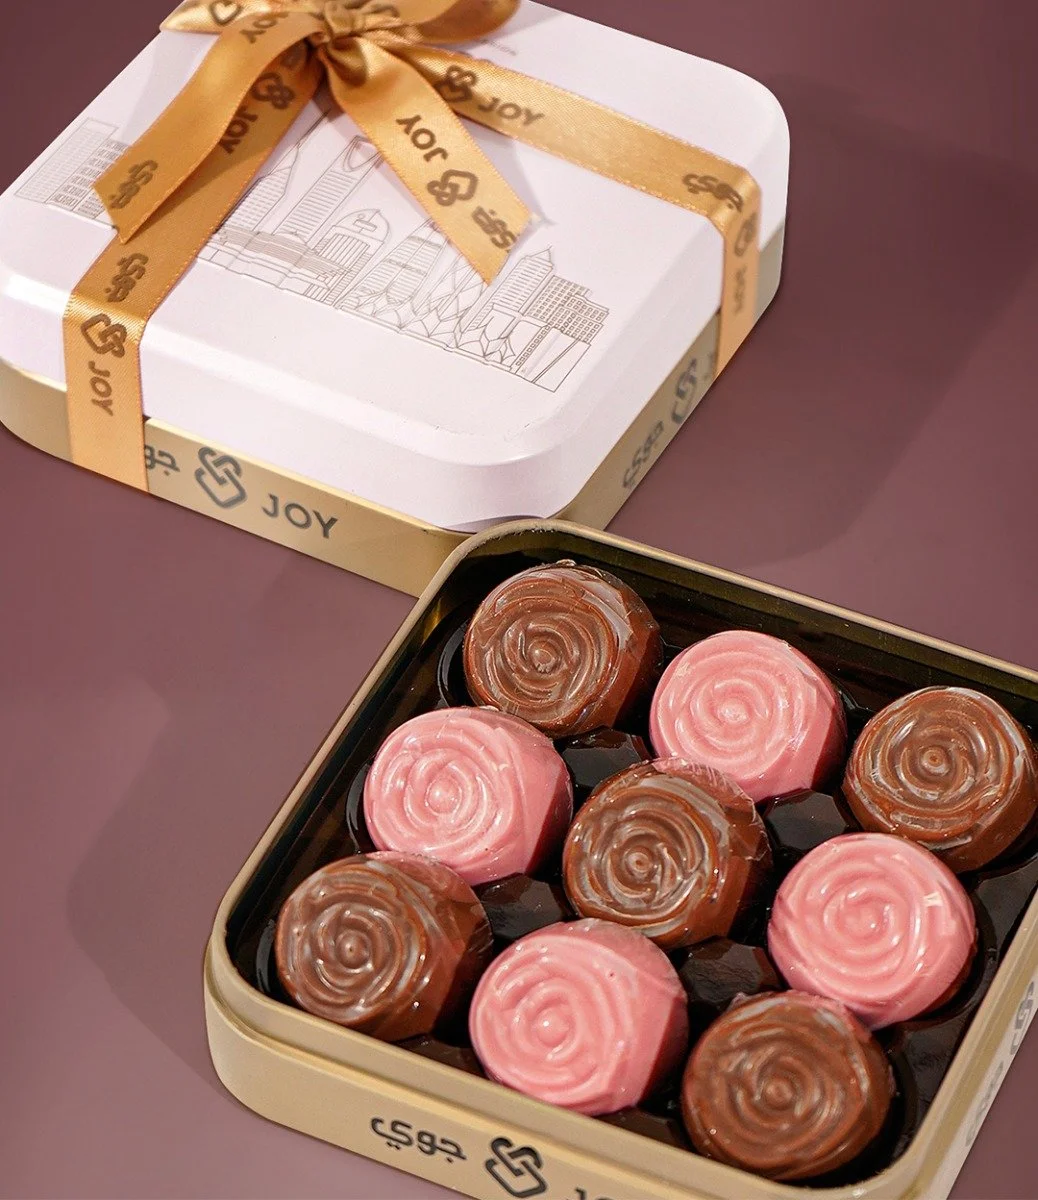 Cotton Candy In Joy Tin Sq Box By Joy Chocolate